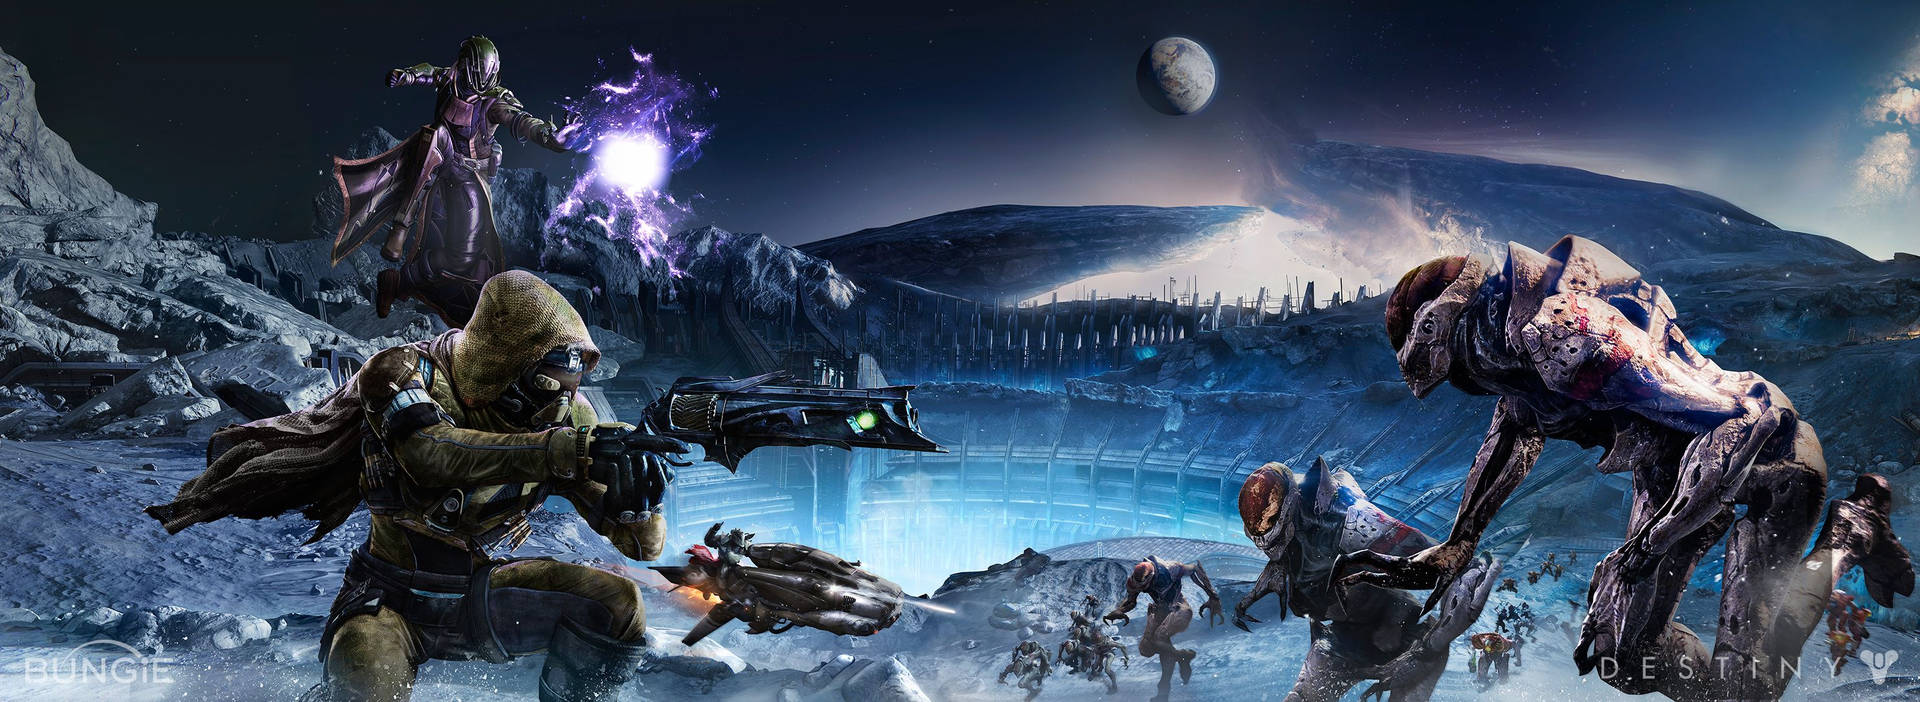 Destiny Guardians vs. The Hive on the Moon Wallpaper